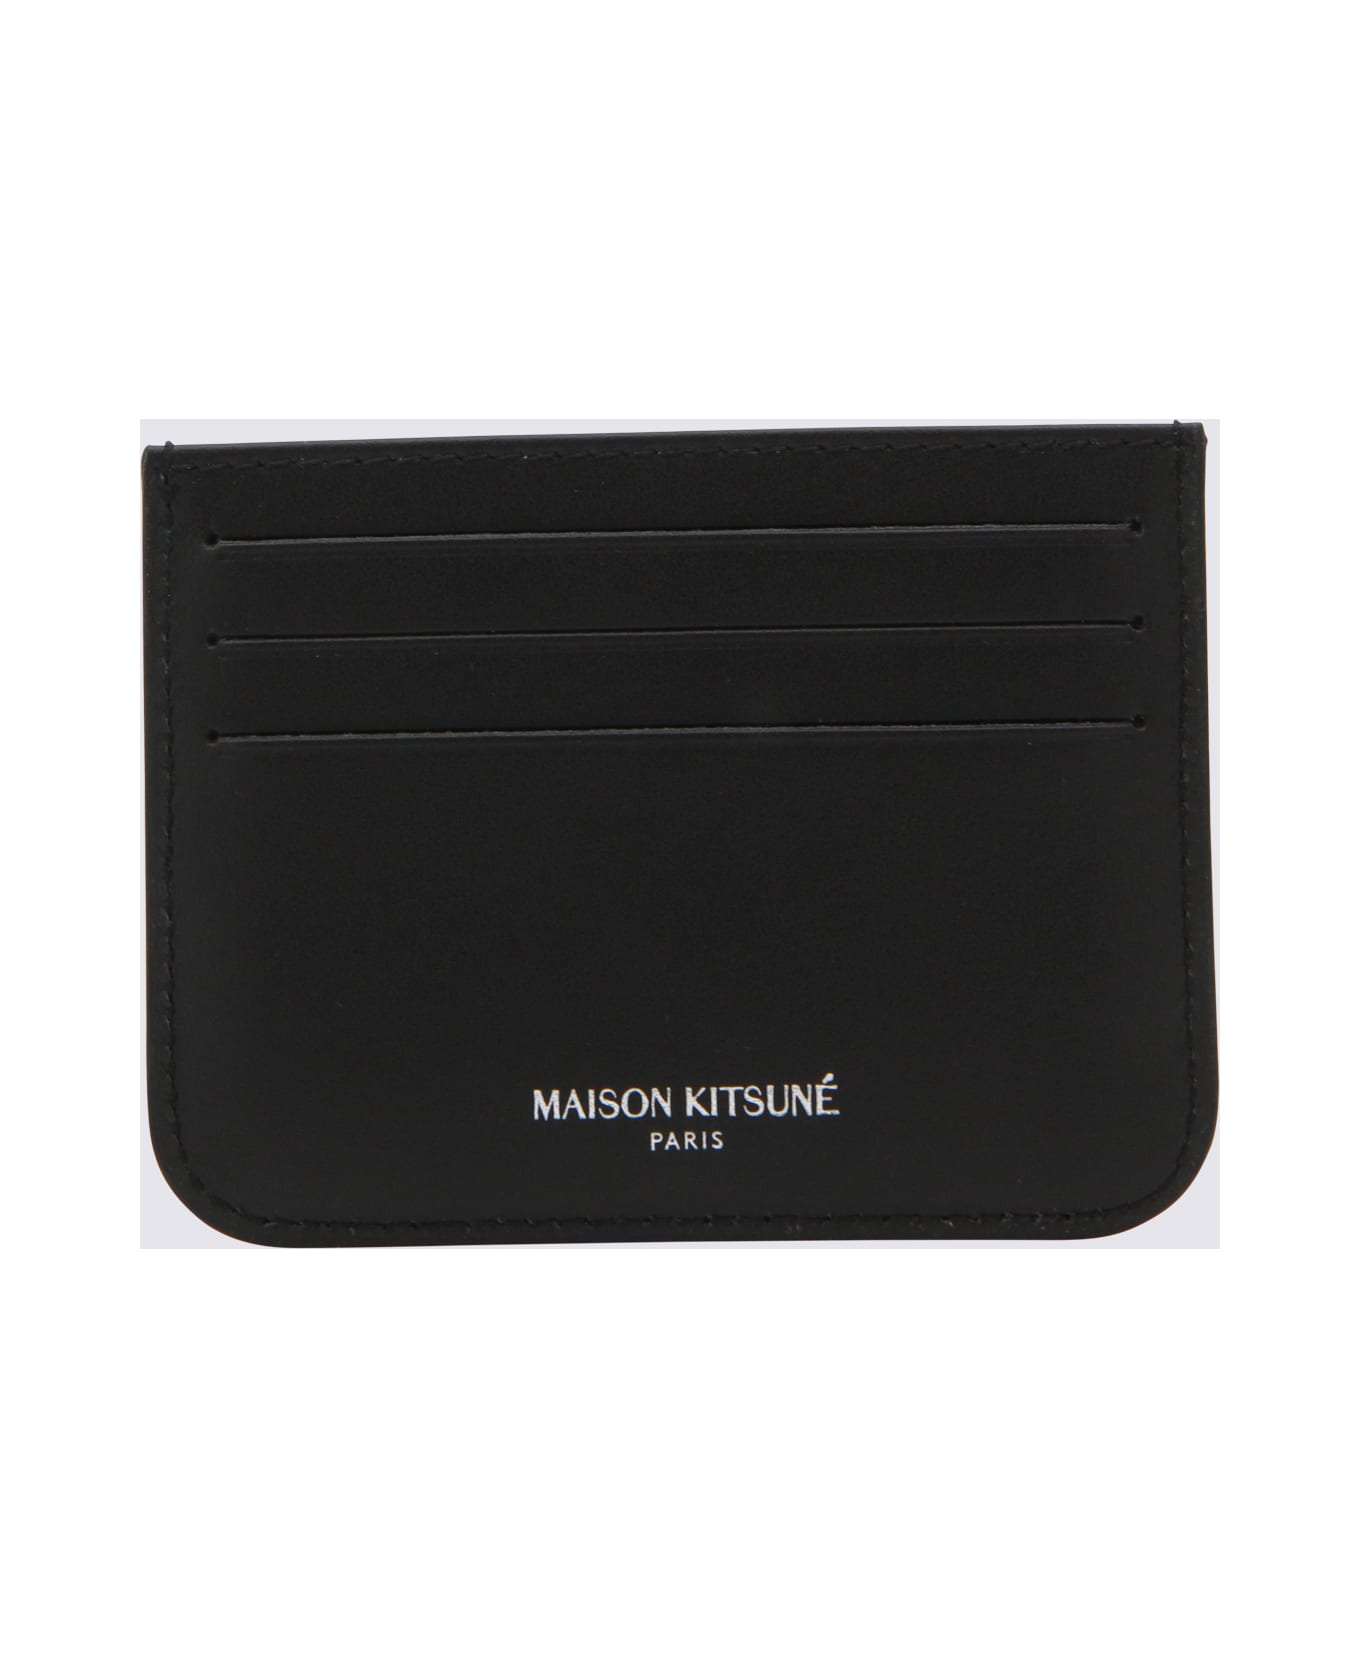 Maison Kitsuné Black Leather Card Holder - Black